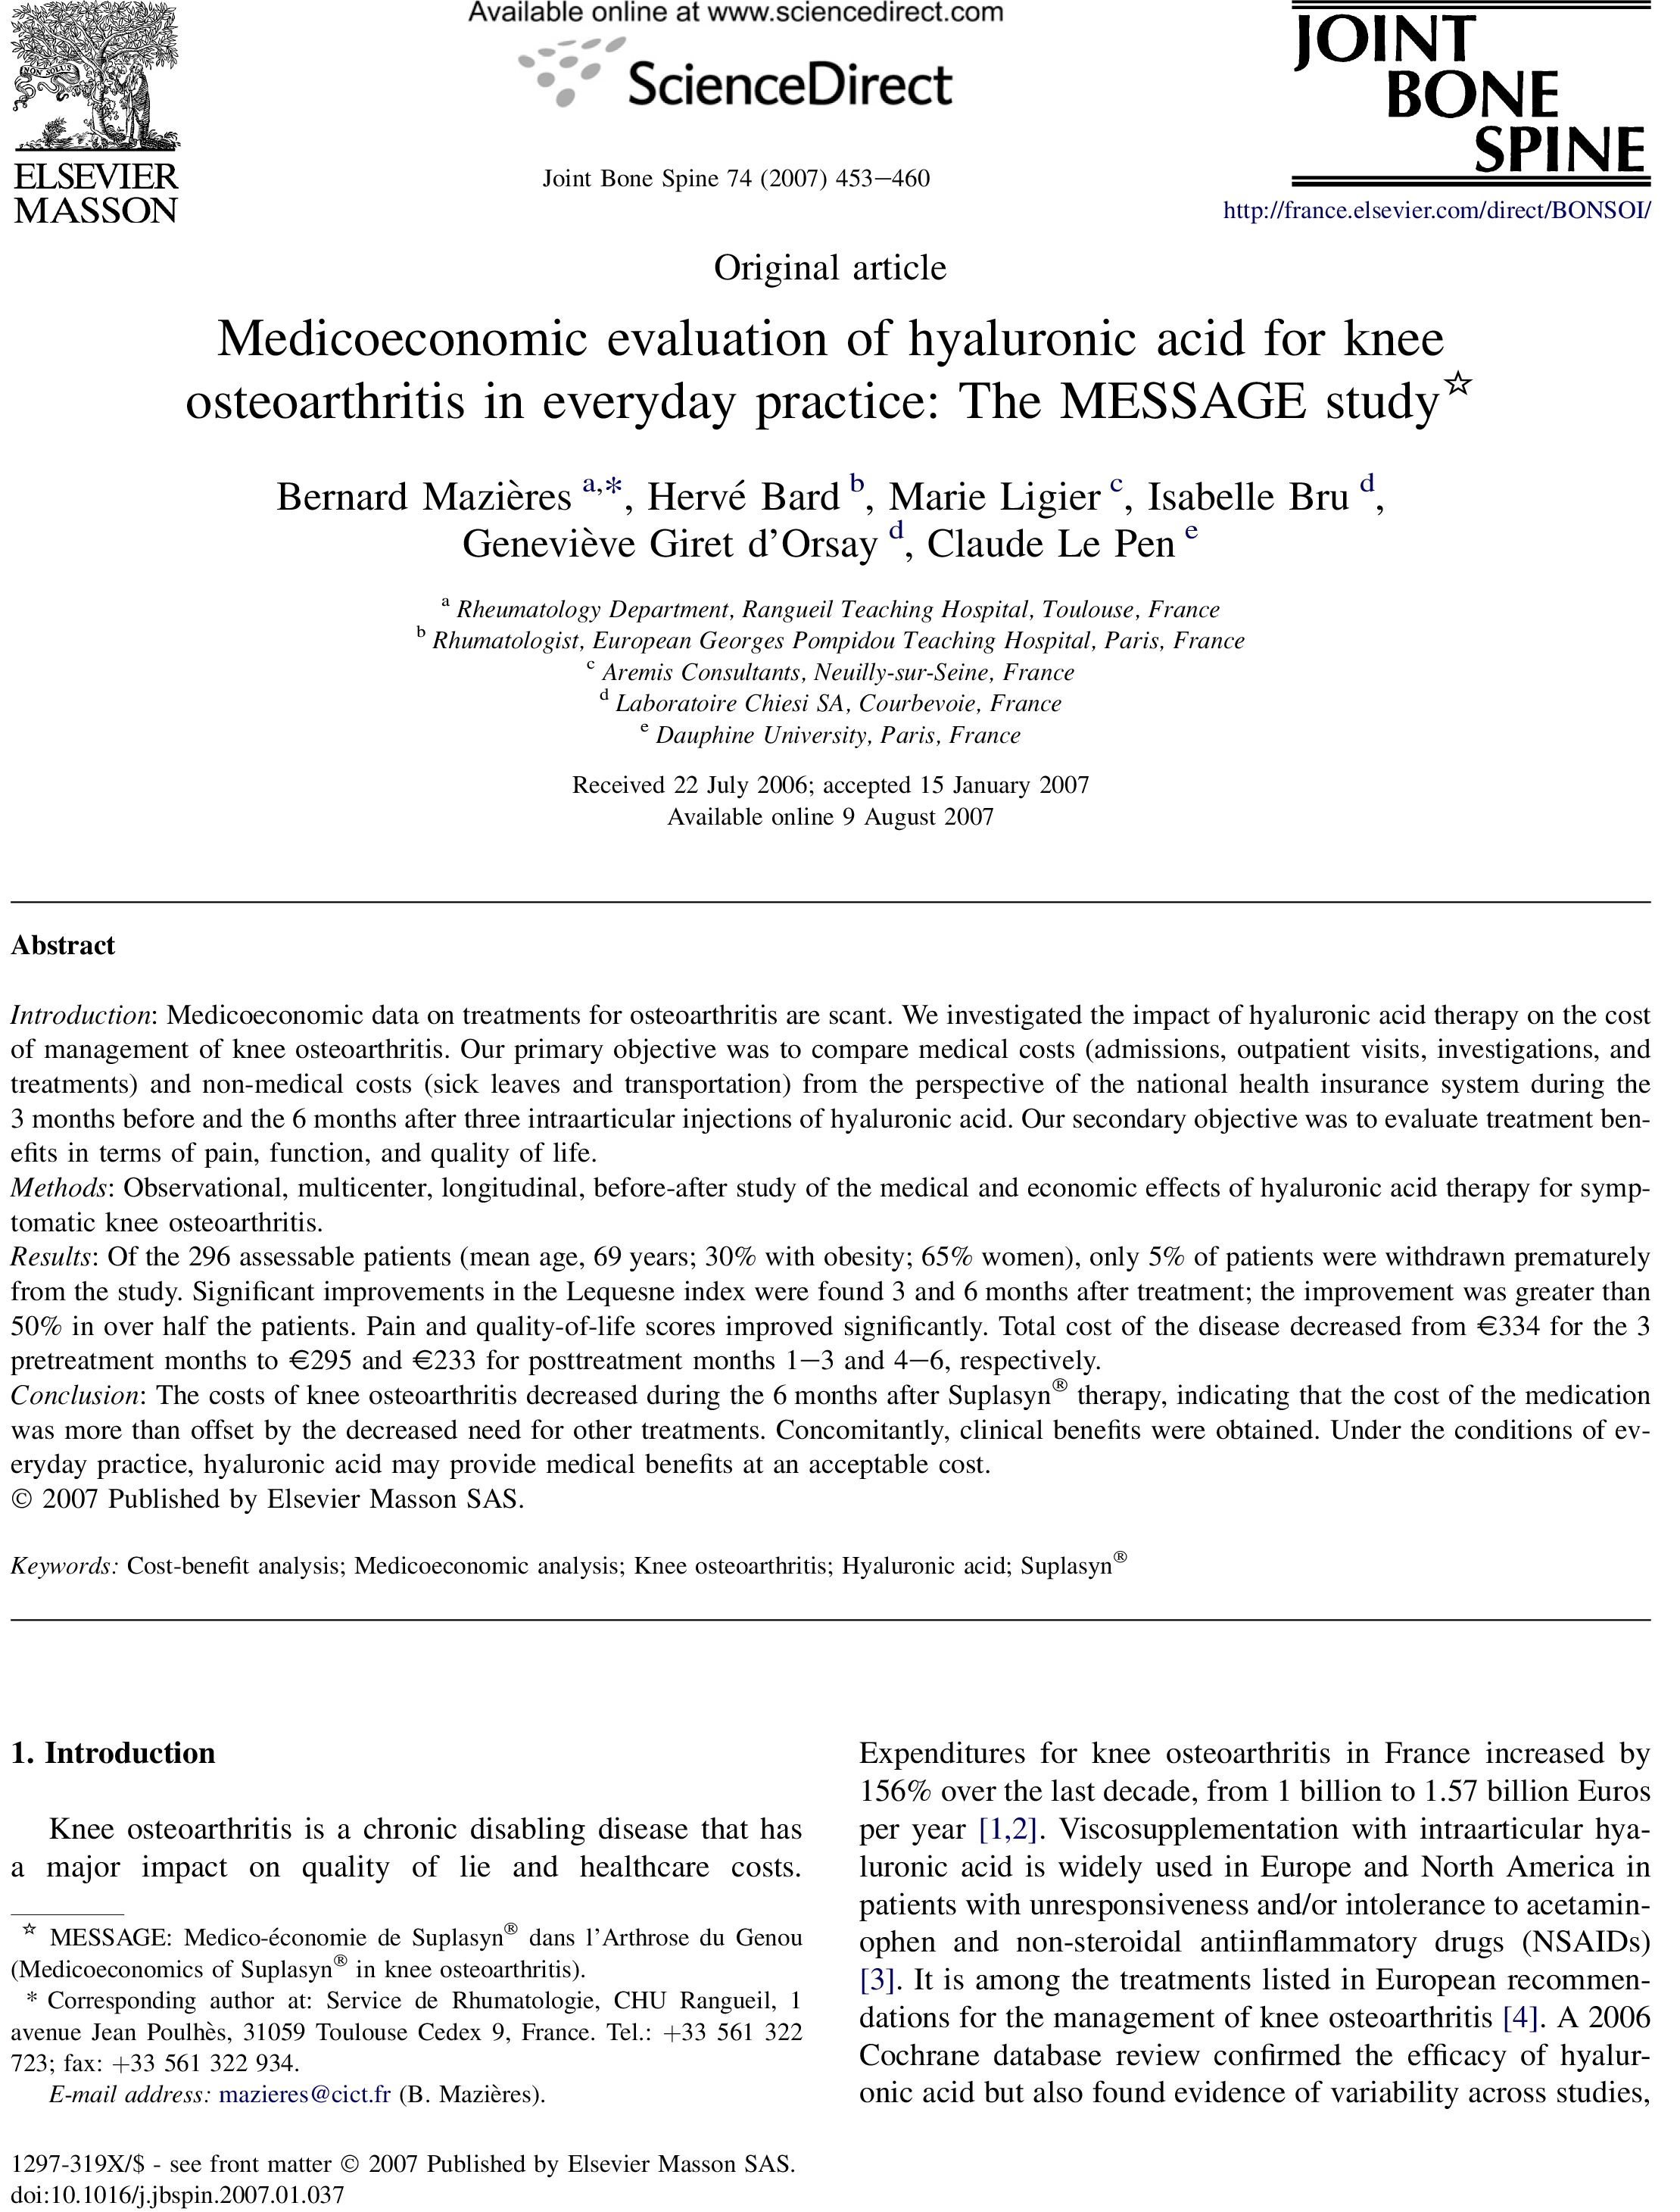 Medicoeconomic-of-hyaluronic-acid-The-MESSAGE-study-1.jpg